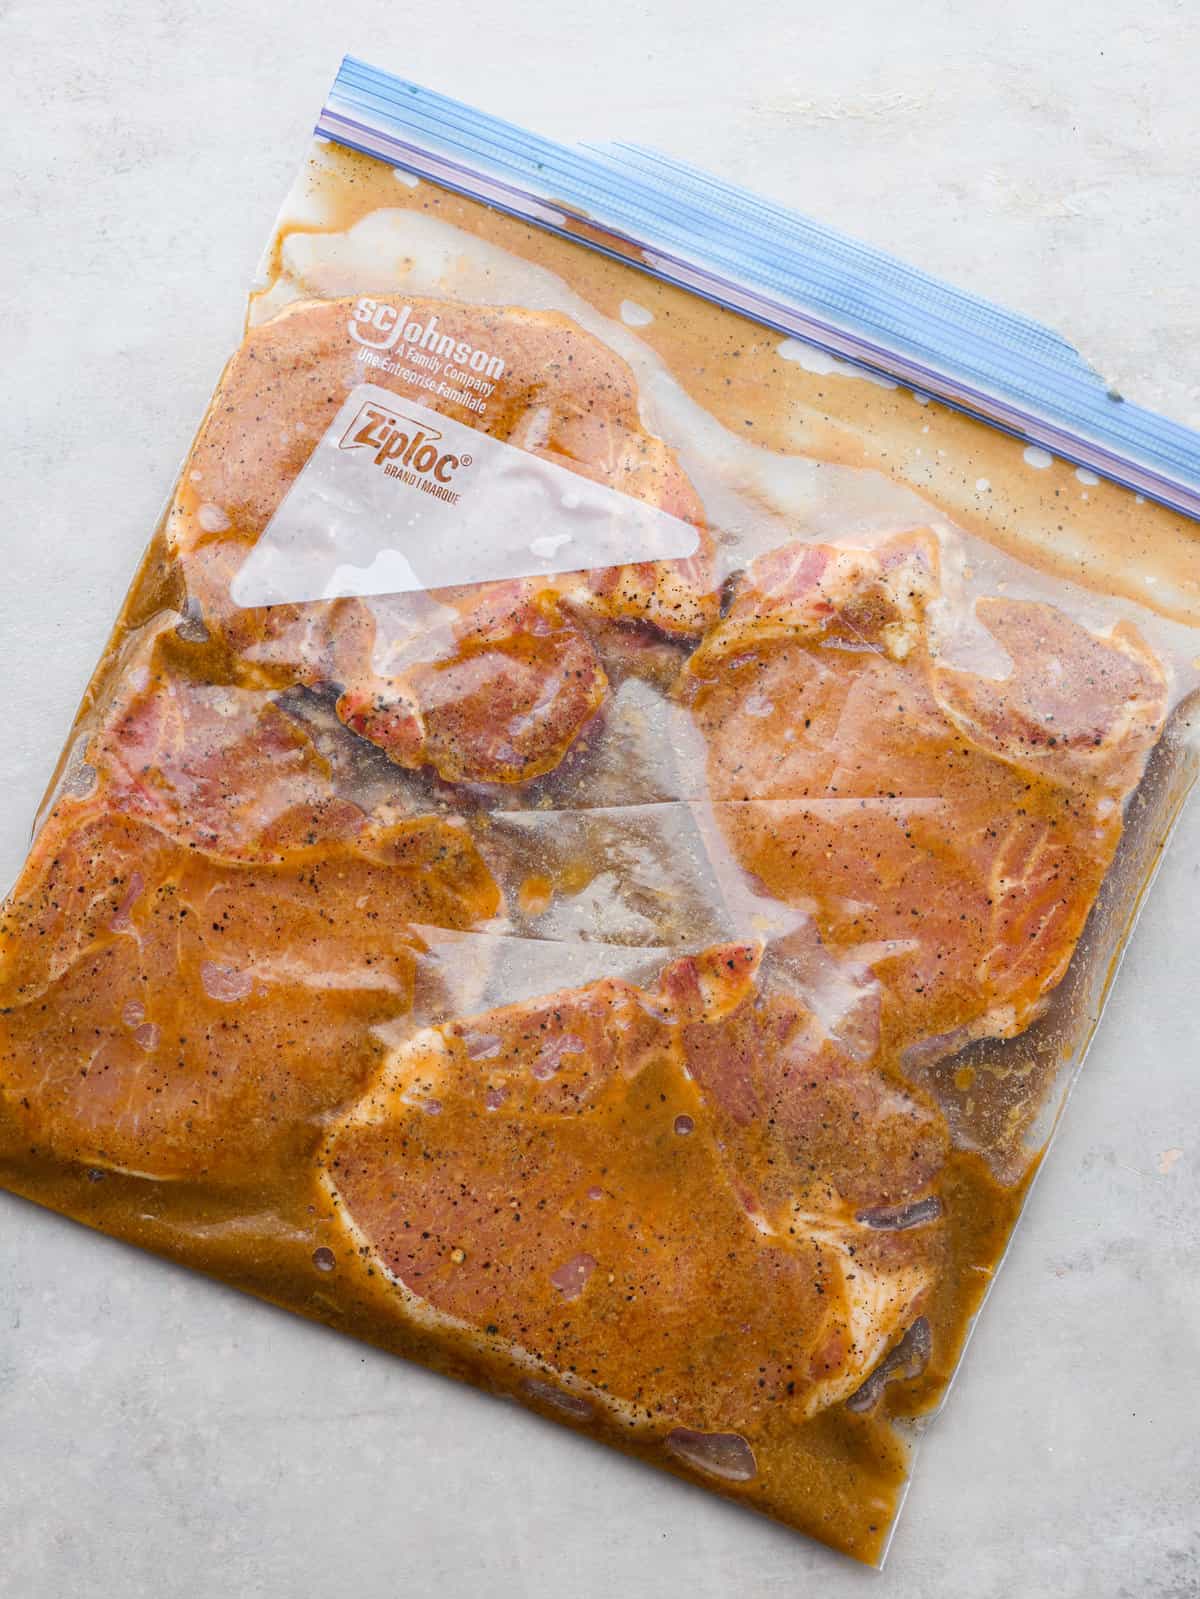 Best Pork Chop Marinade Recipe